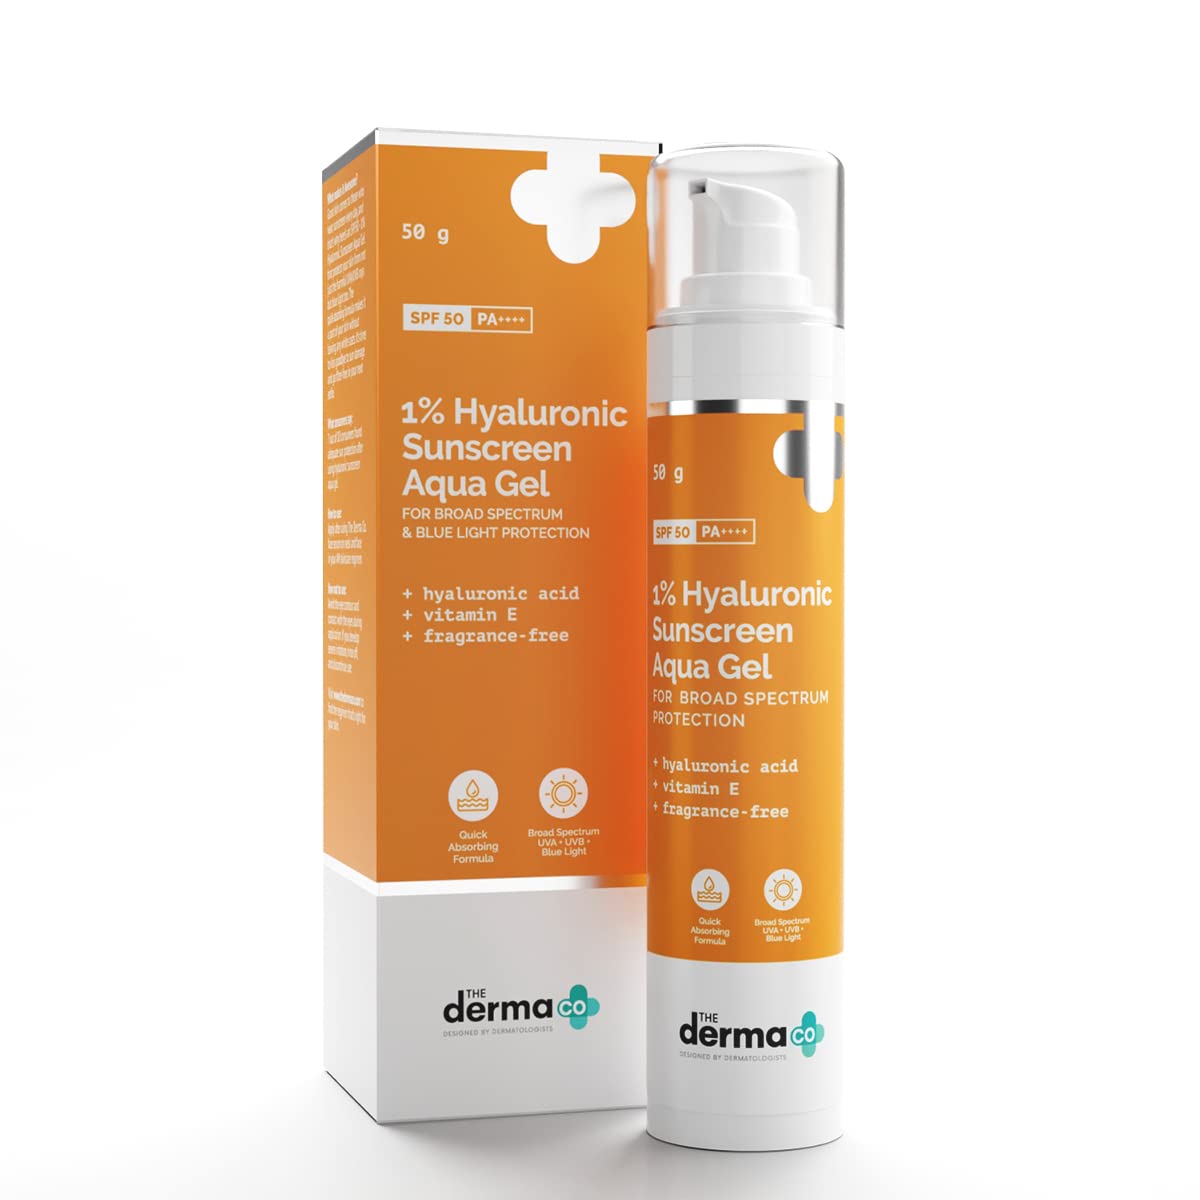 Buy The Derma Co 1% Hyaluronic Sunscreen Aqua Gel online usa [ USA ] 